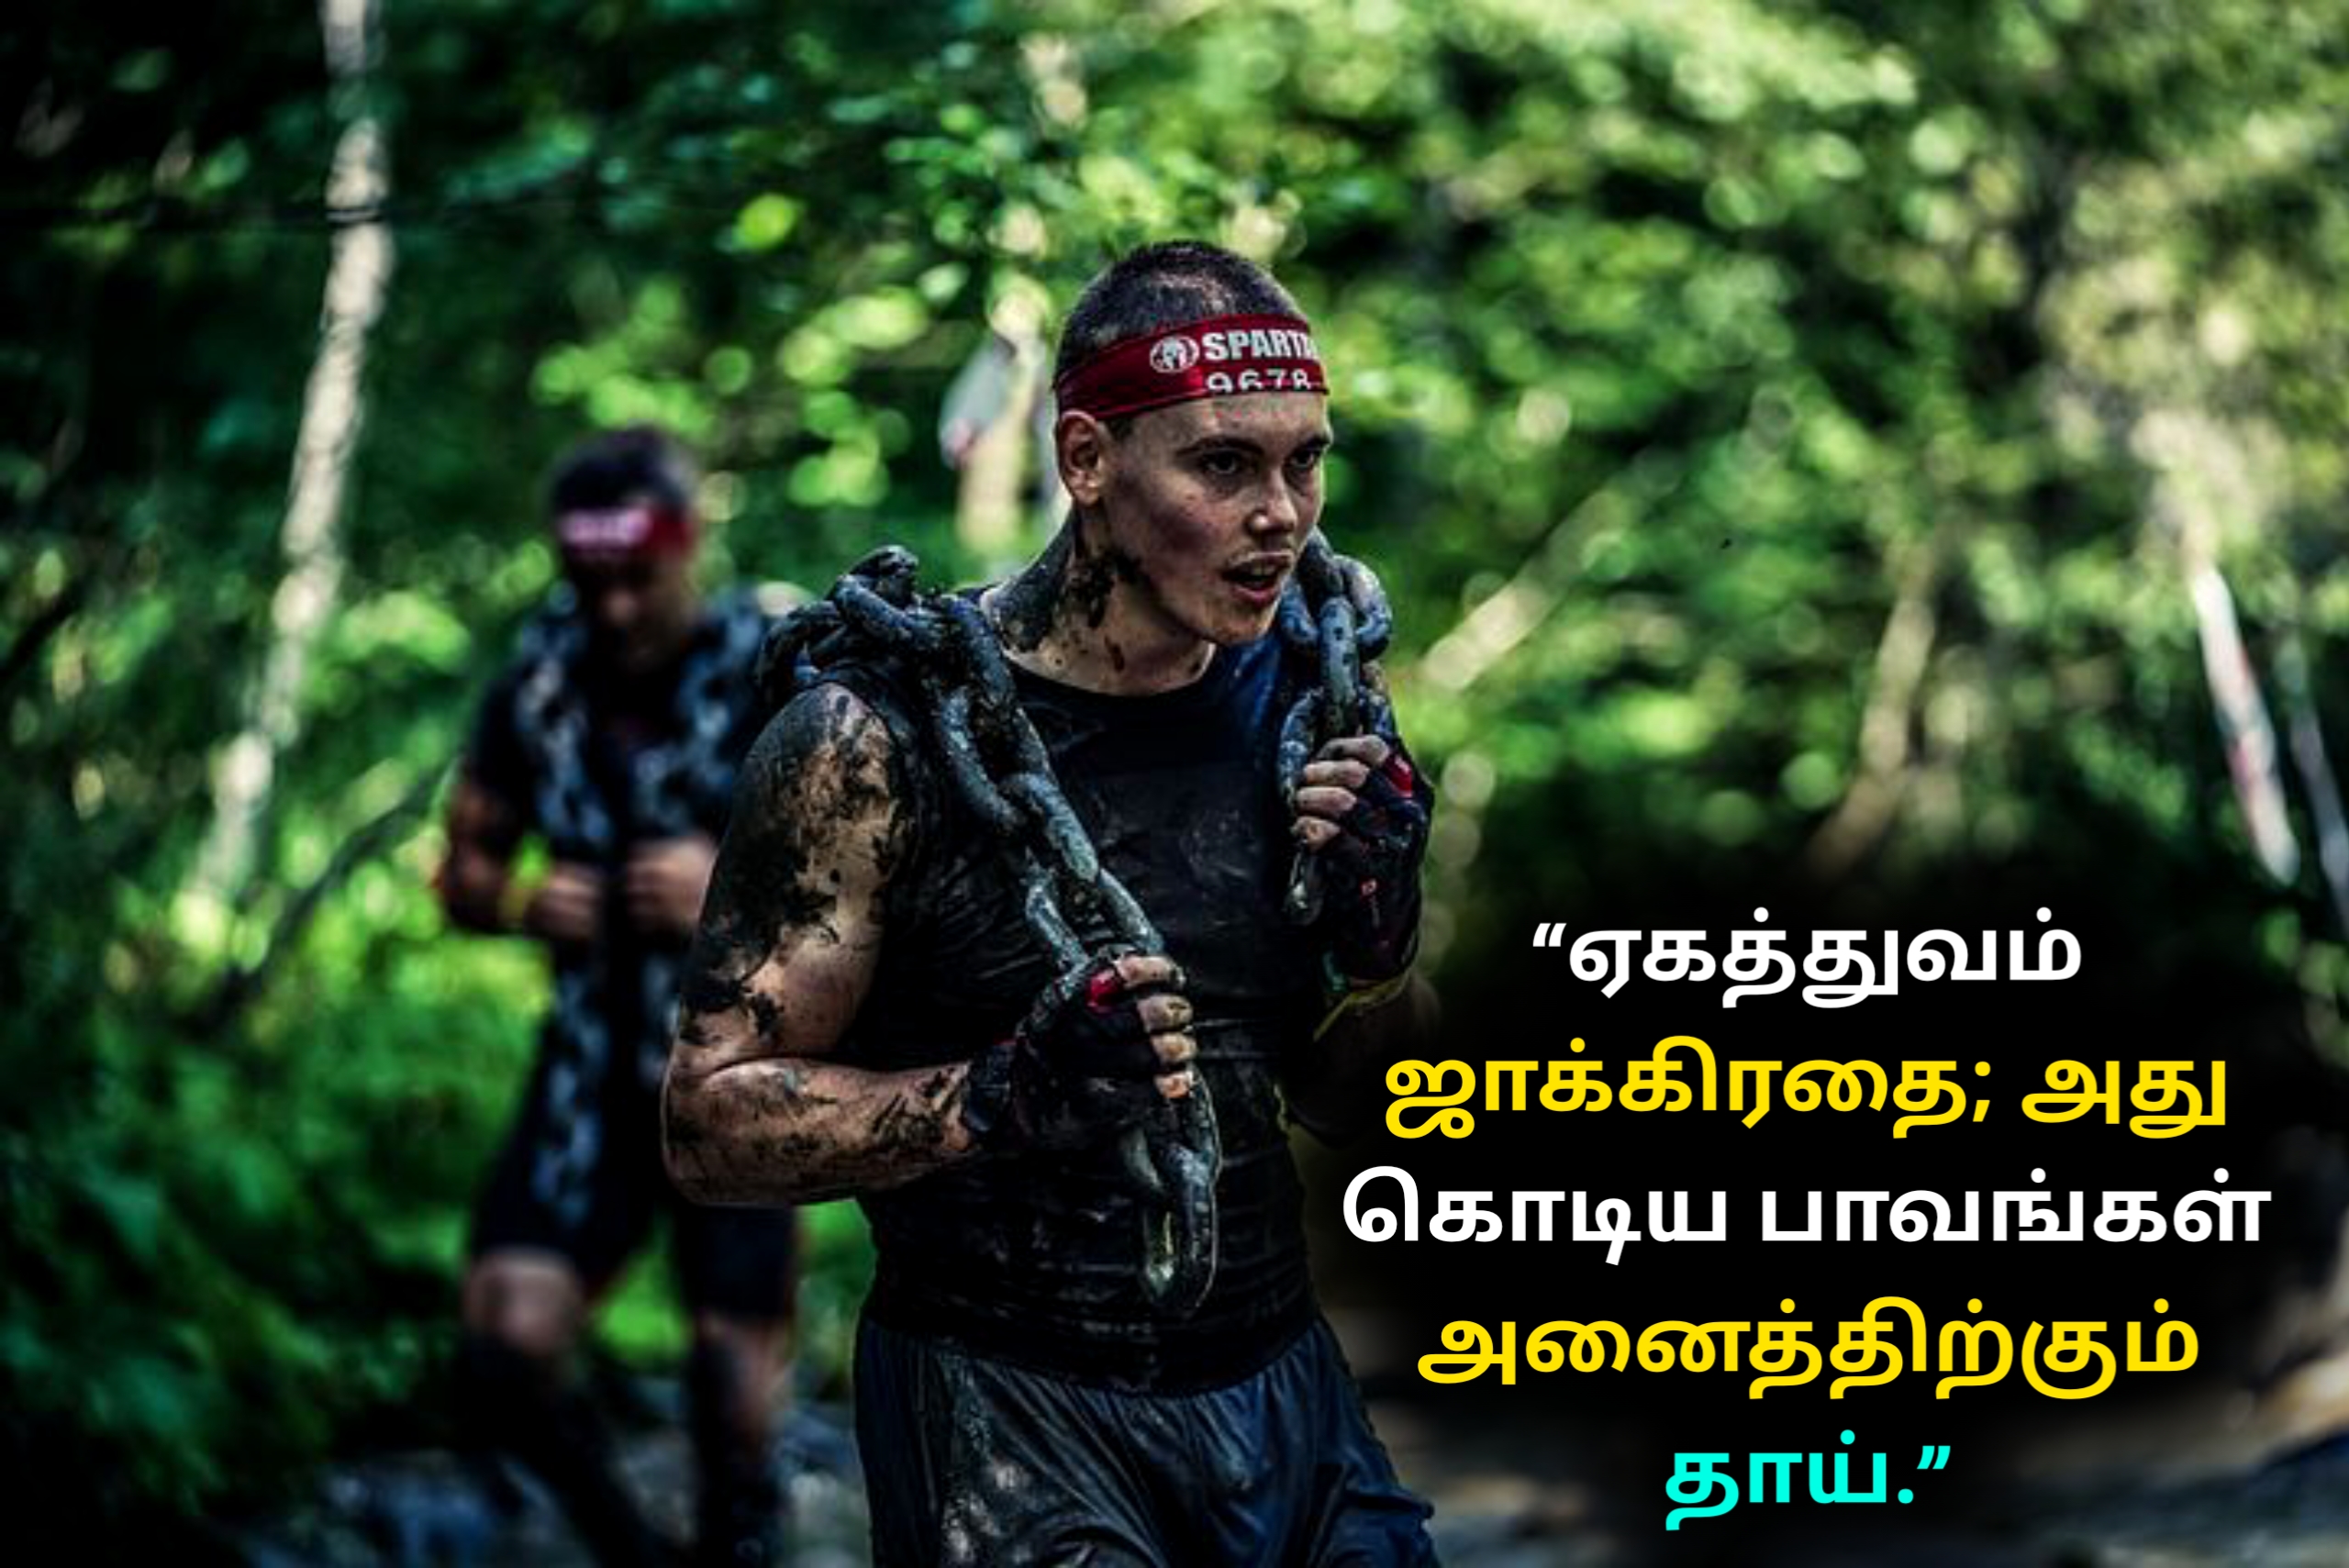 Motivational quotes in Tamil | मोटिवेशनल कोट्स इन तमिल,positivity motivational quotes in tamil,success motivational quotes in tamil,self confidence positivity motivational quotes in tamil,life motivational quotes in tamil